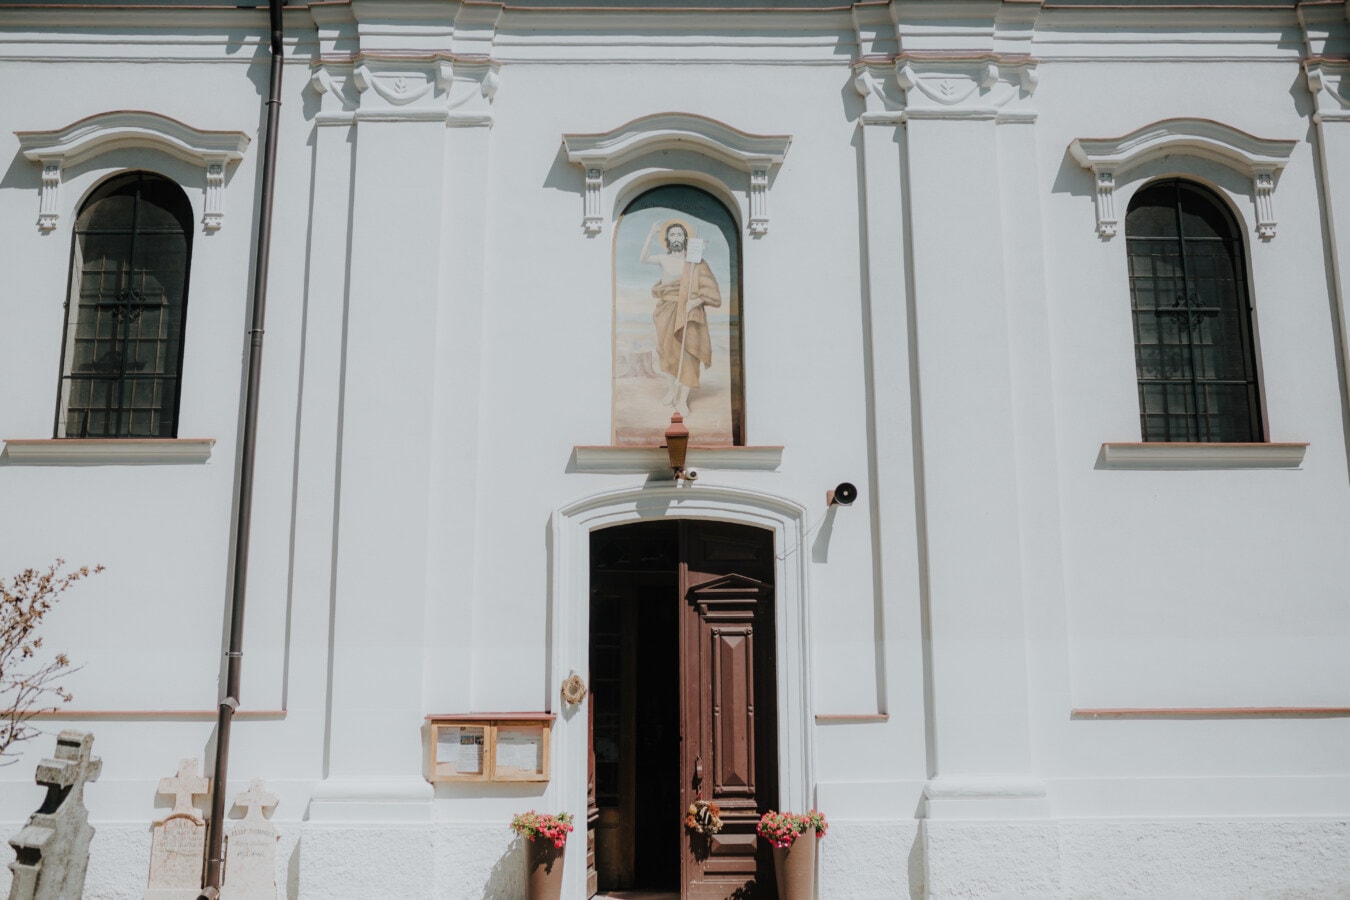 Kirche St. Johannes Baptist, Wandbild, Heilige, Christentum, Eingang, vor der Tür, Kirche, weiß, Wand